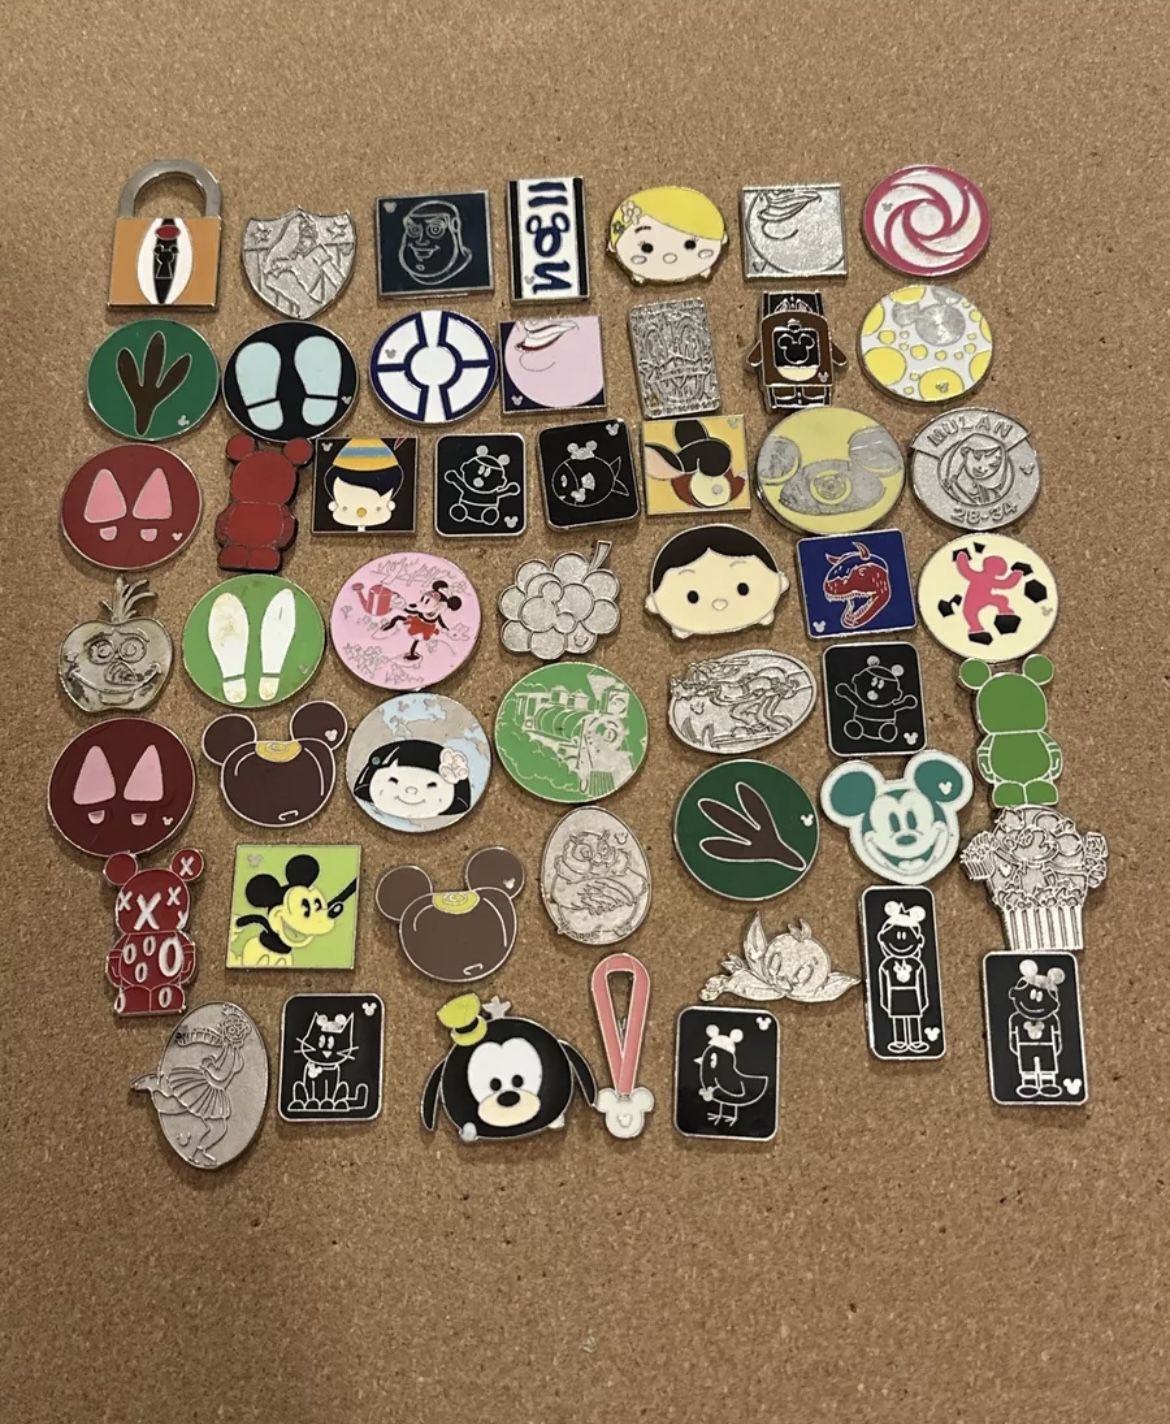 Lot Of 50 Disney Trading Pins Hidden Mickey Various Years 2000-2017 NO BACKS